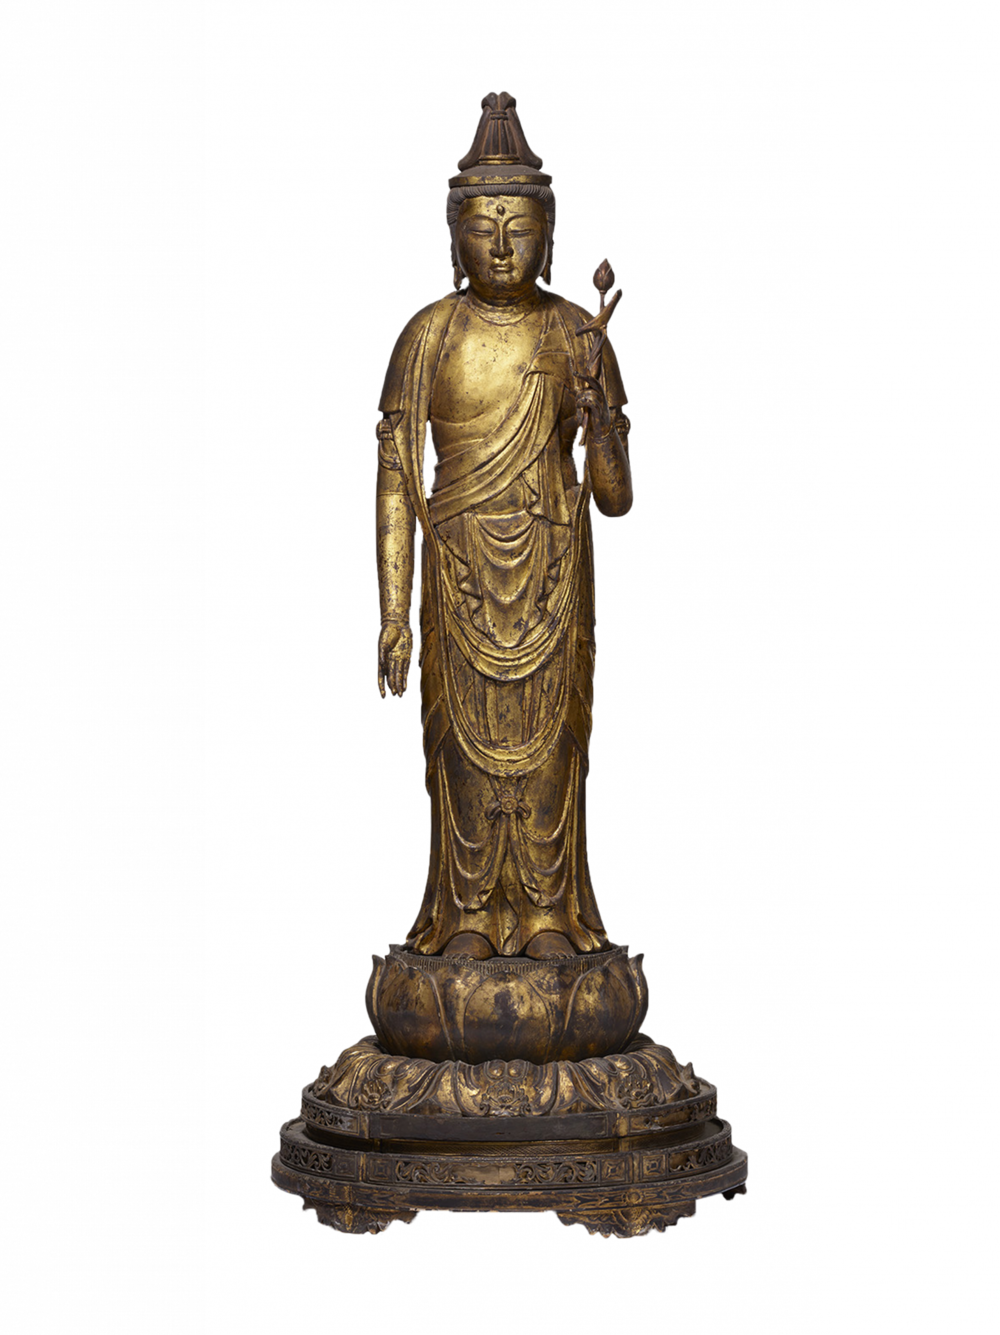 Kannon, the Bodhisattva of Compassion